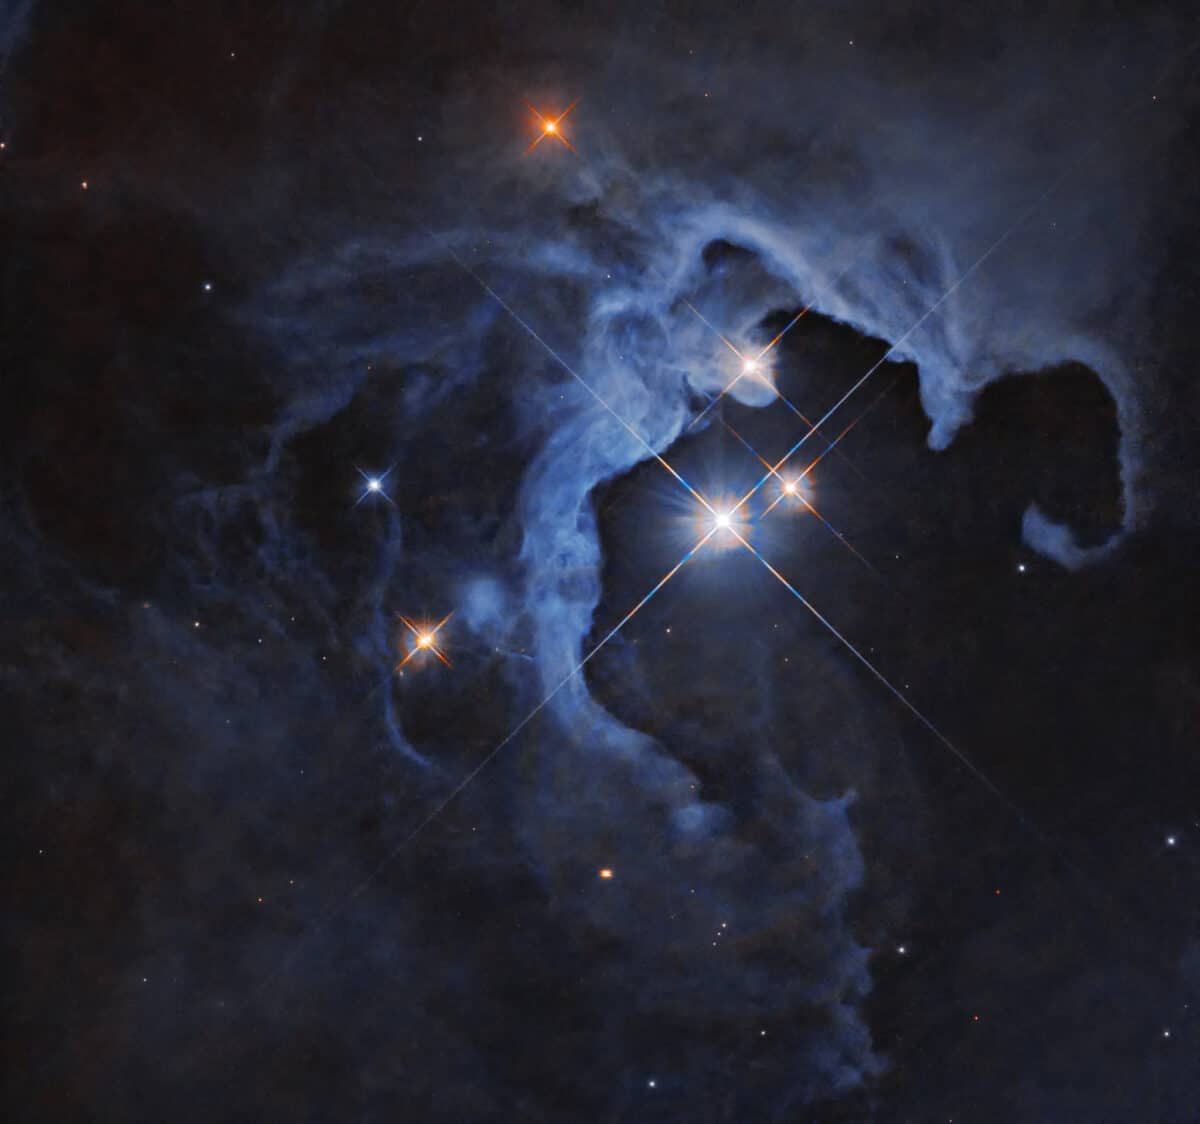  Тройная звездная система HP Tau / © NASA, ESA, G. Duchene (Universite de Grenoble I); Image Processing: Gladys Kober (NASA/Catholic University of America)